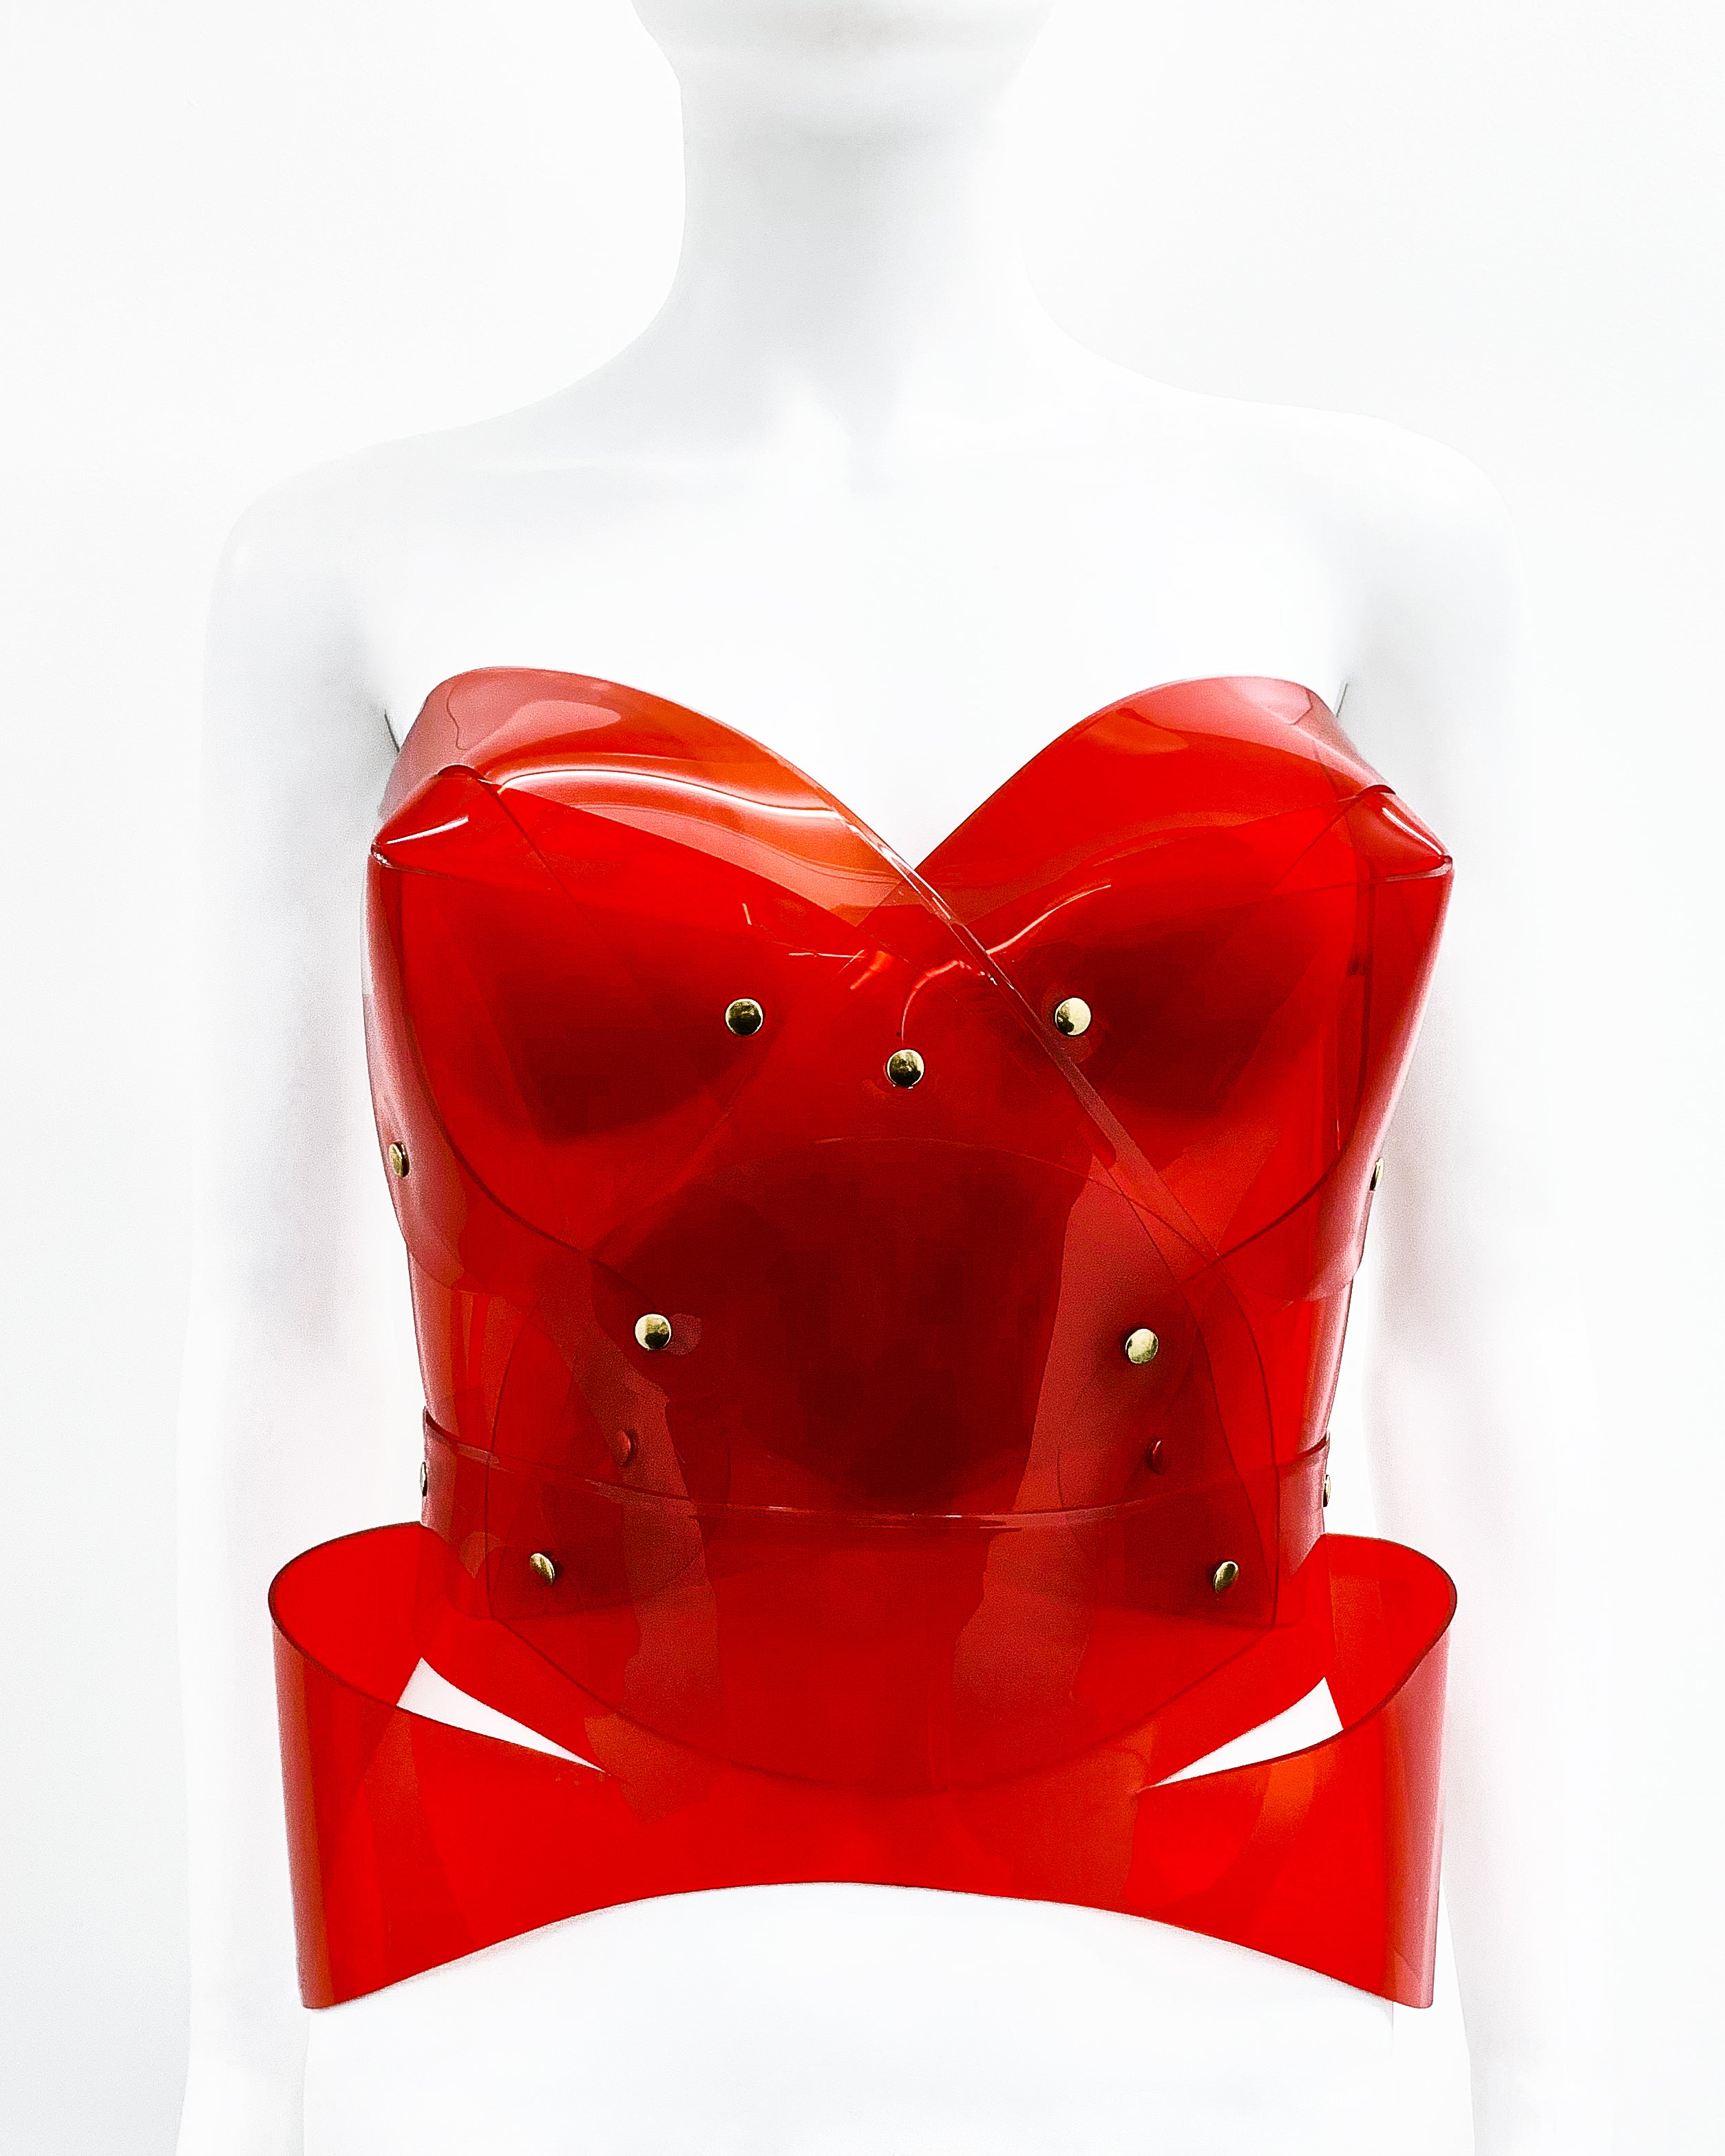 Jivomir Domoustchiev vegan vinyl Sculpture Bustier red love valentines